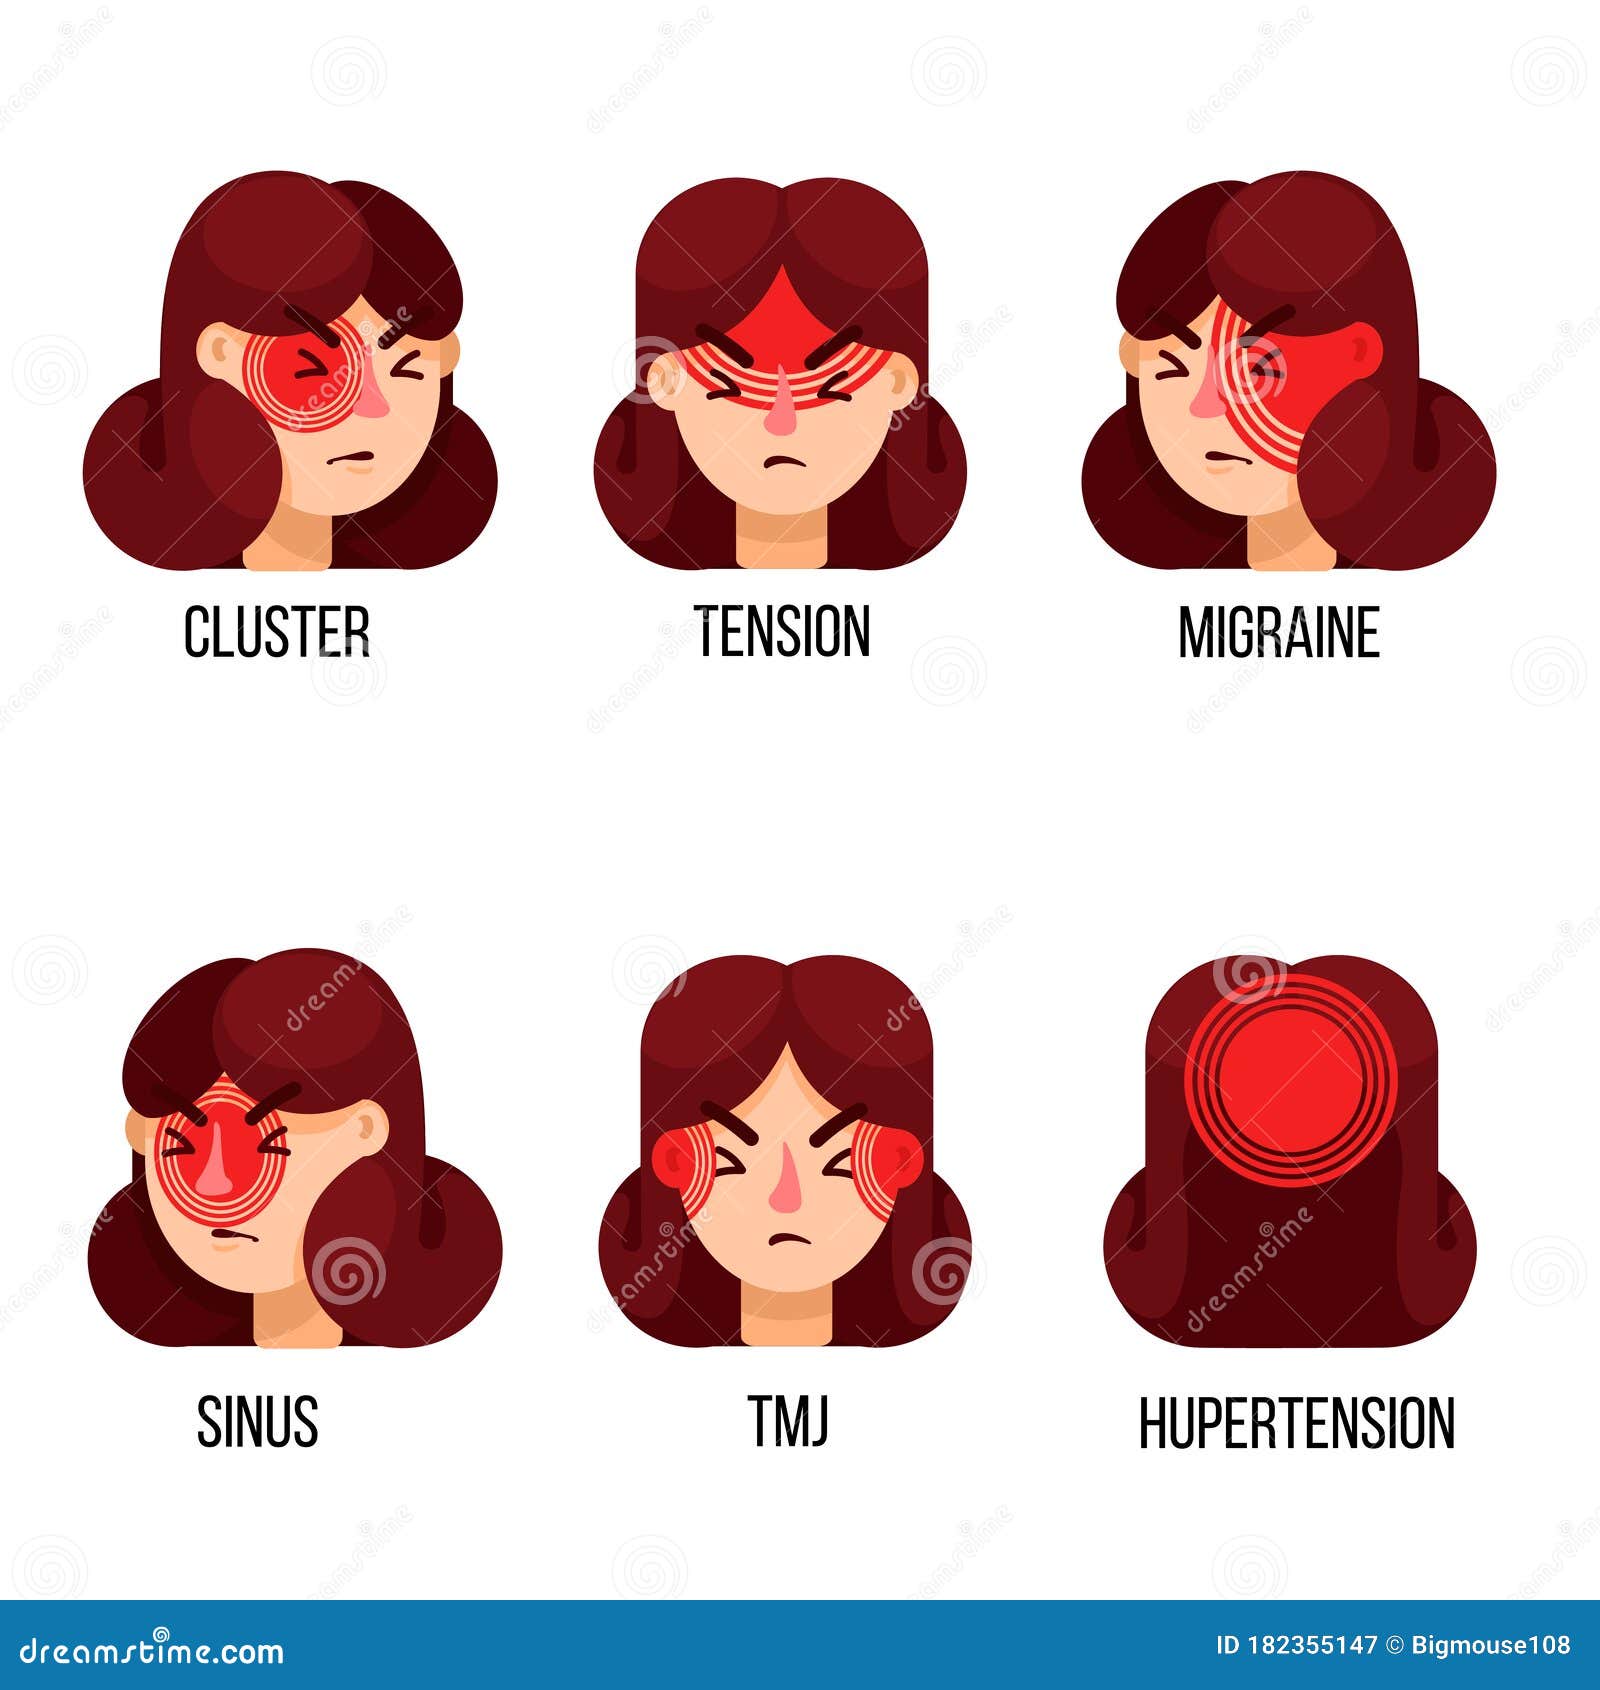 Types Of Headaches Set Of Headache Types Vector Illustration